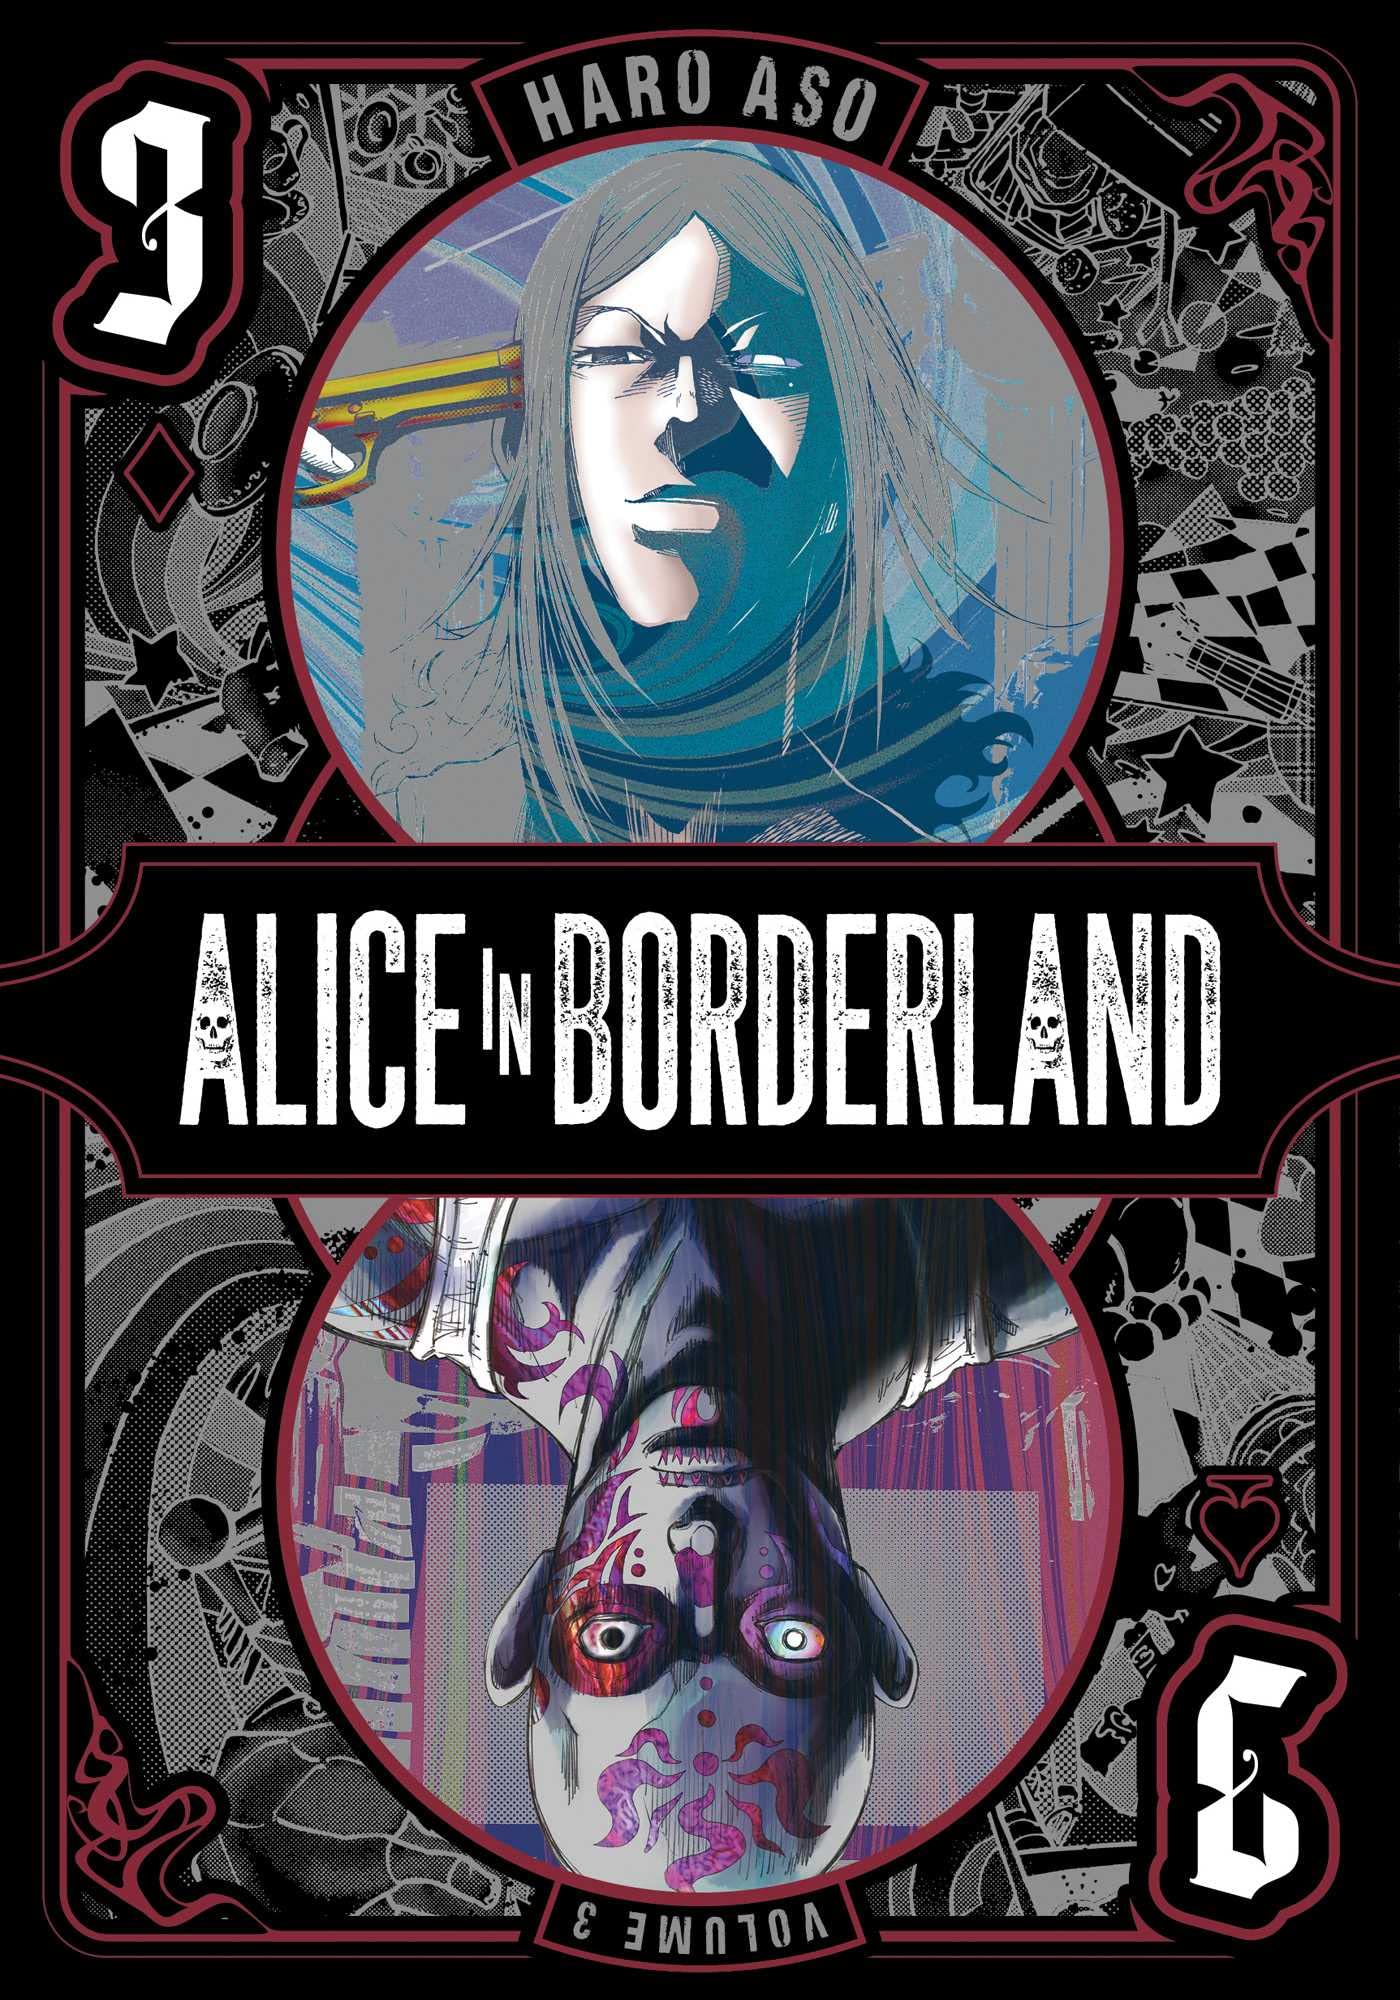 Mangá de Alice in Borderland é lançado no Brasil